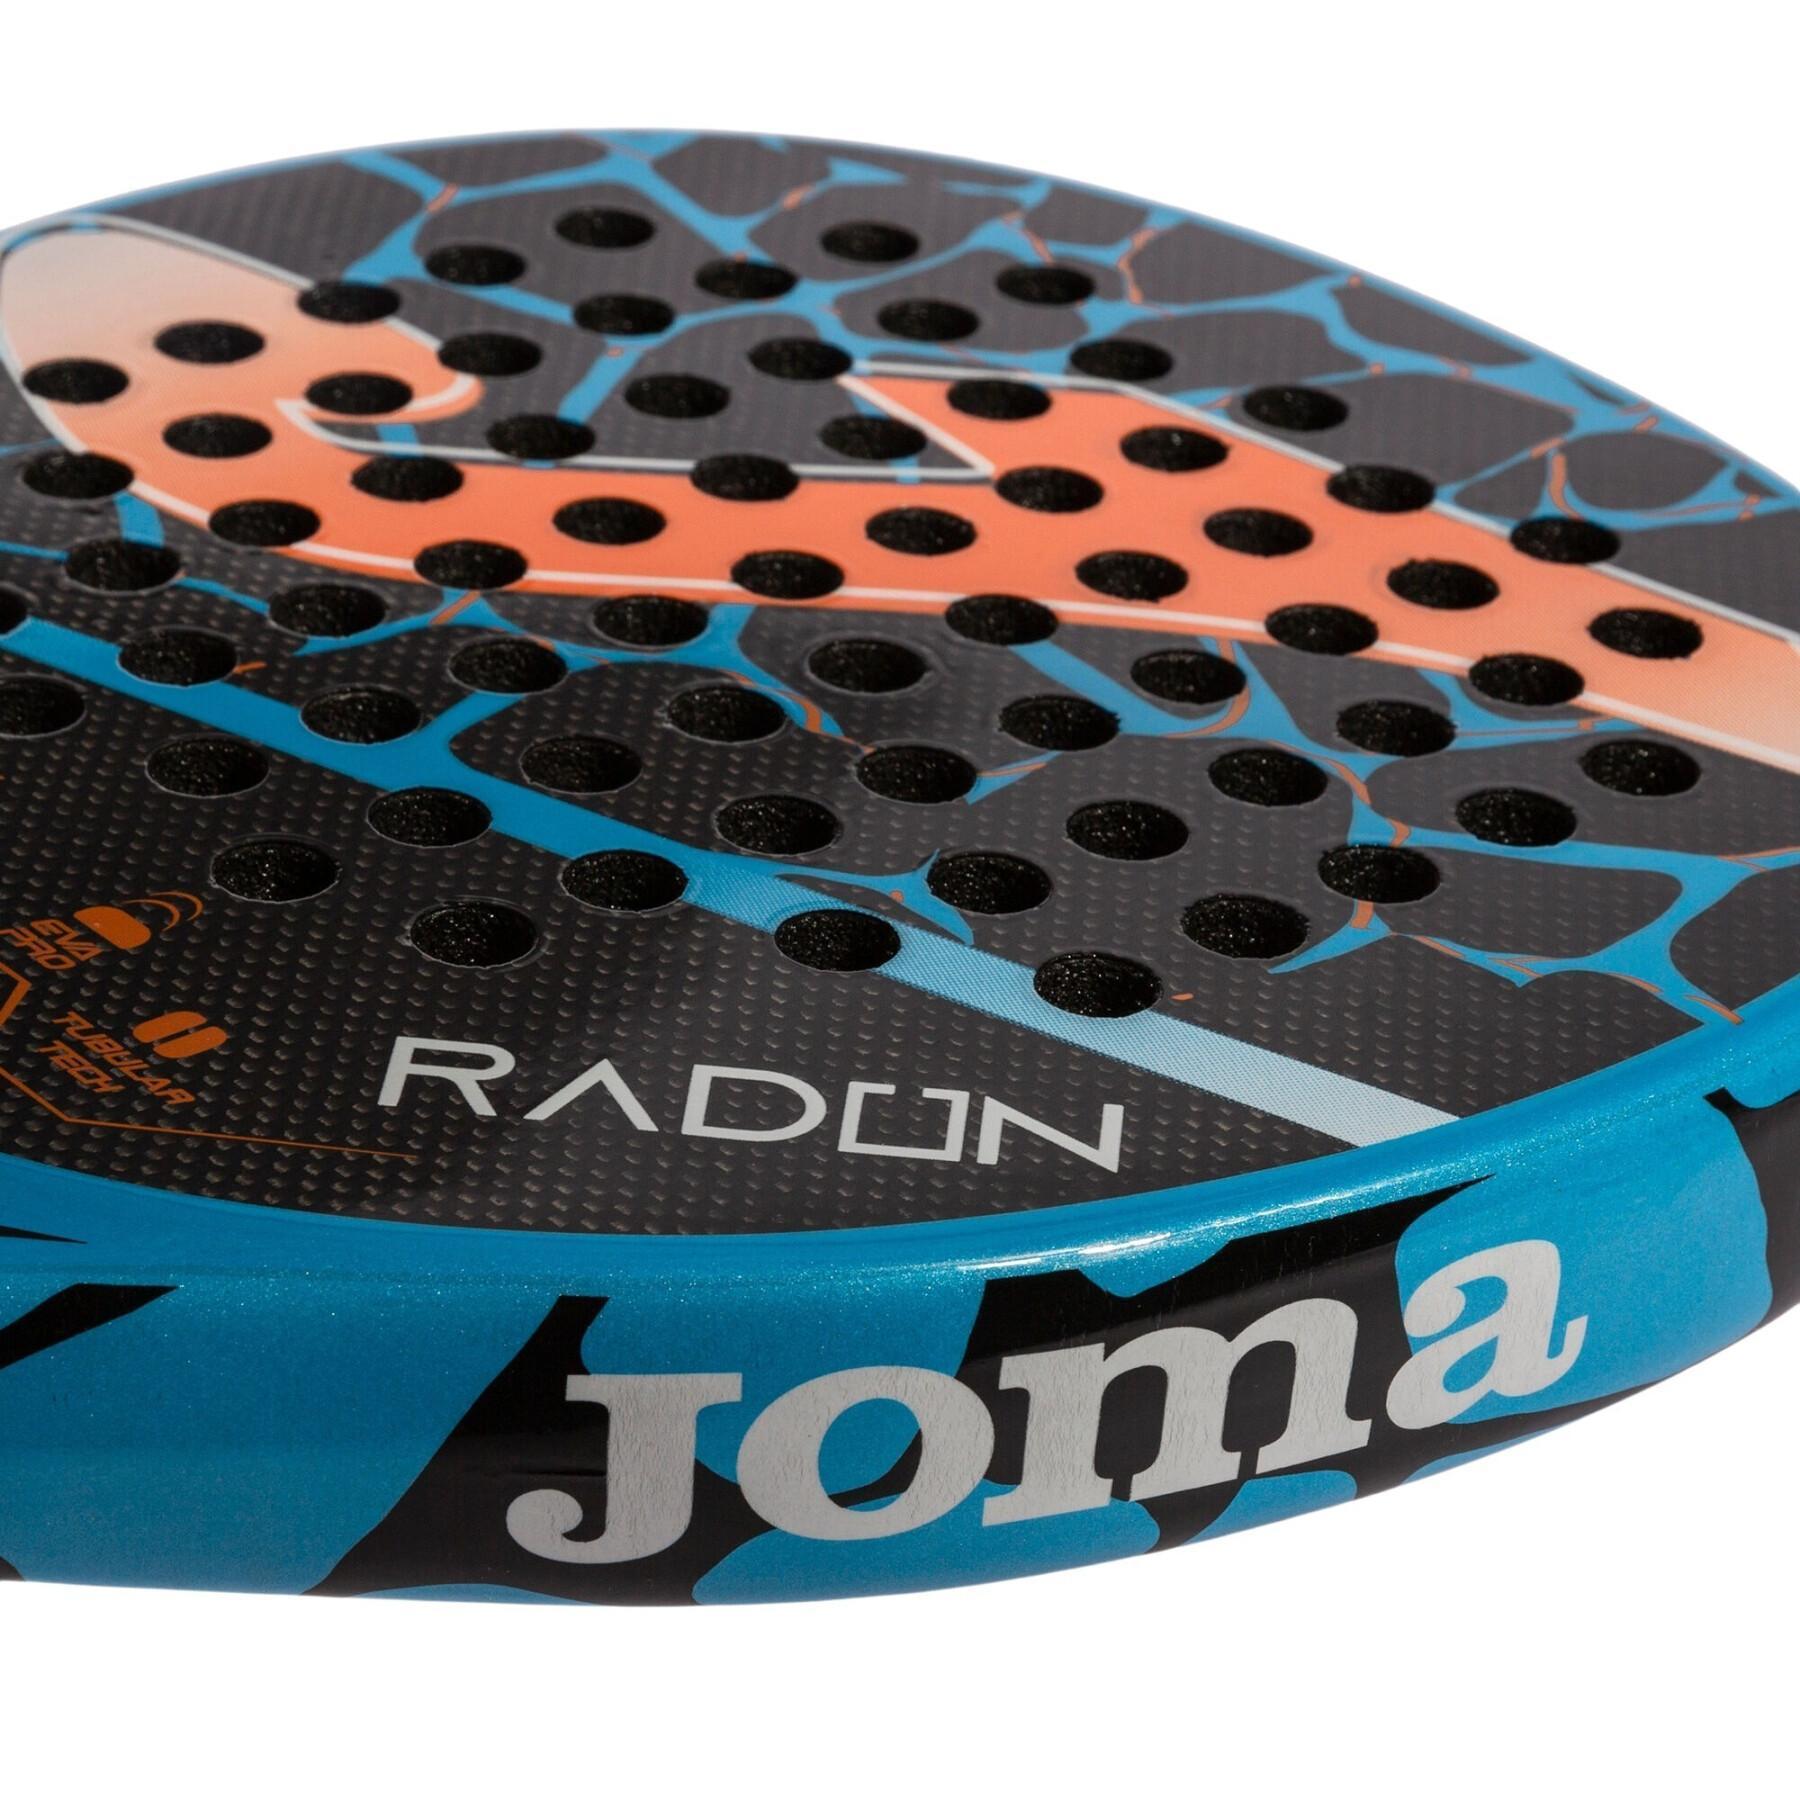 Paddle Tennis Racket Joma Radon